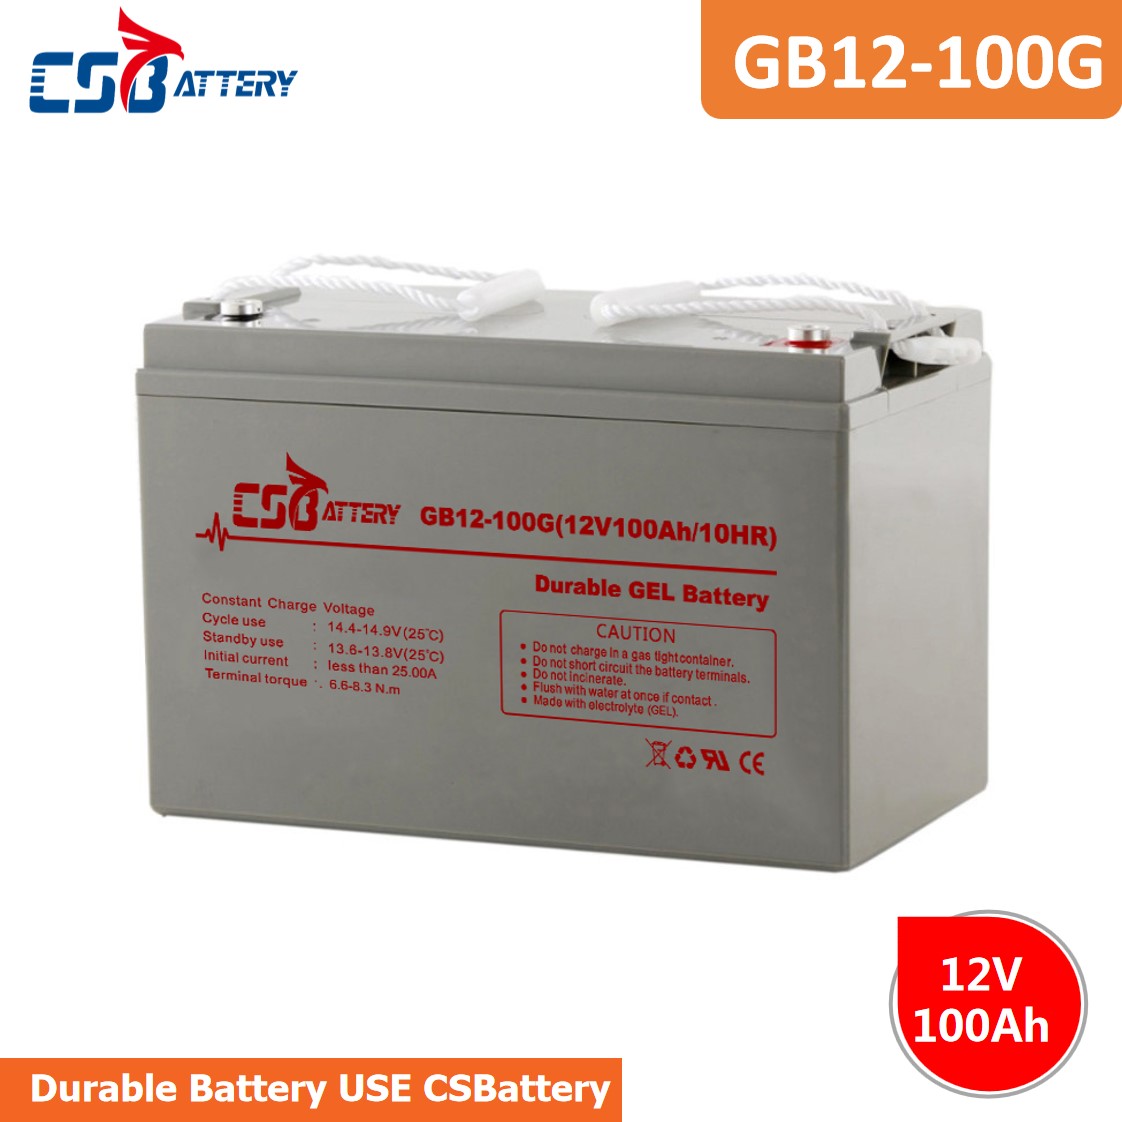 GB12-100AG 12V 100Ah Durable Long Life Gel Battery